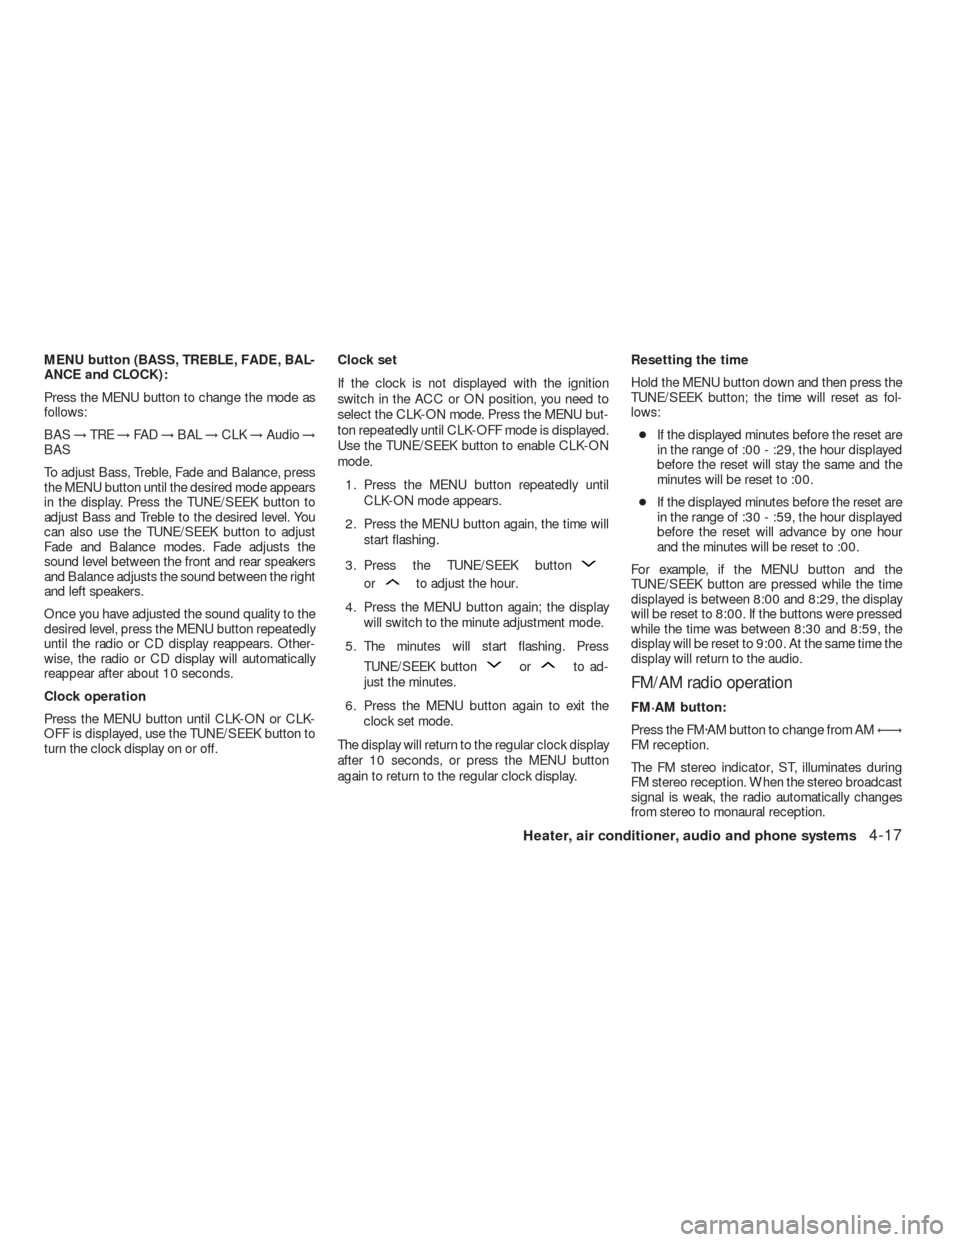 NISSAN VERSA HATCHBACK 2009 1.G Owners Manual MENU button (BASS, TREBLE, FADE, BAL-
ANCE and CLOCK):
Press the MENU button to change the mode as
follows:
BAS→TRE→FAD→BAL→CLK→Audio→
BAS
To adjust Bass, Treble, Fade and Balance, press
t